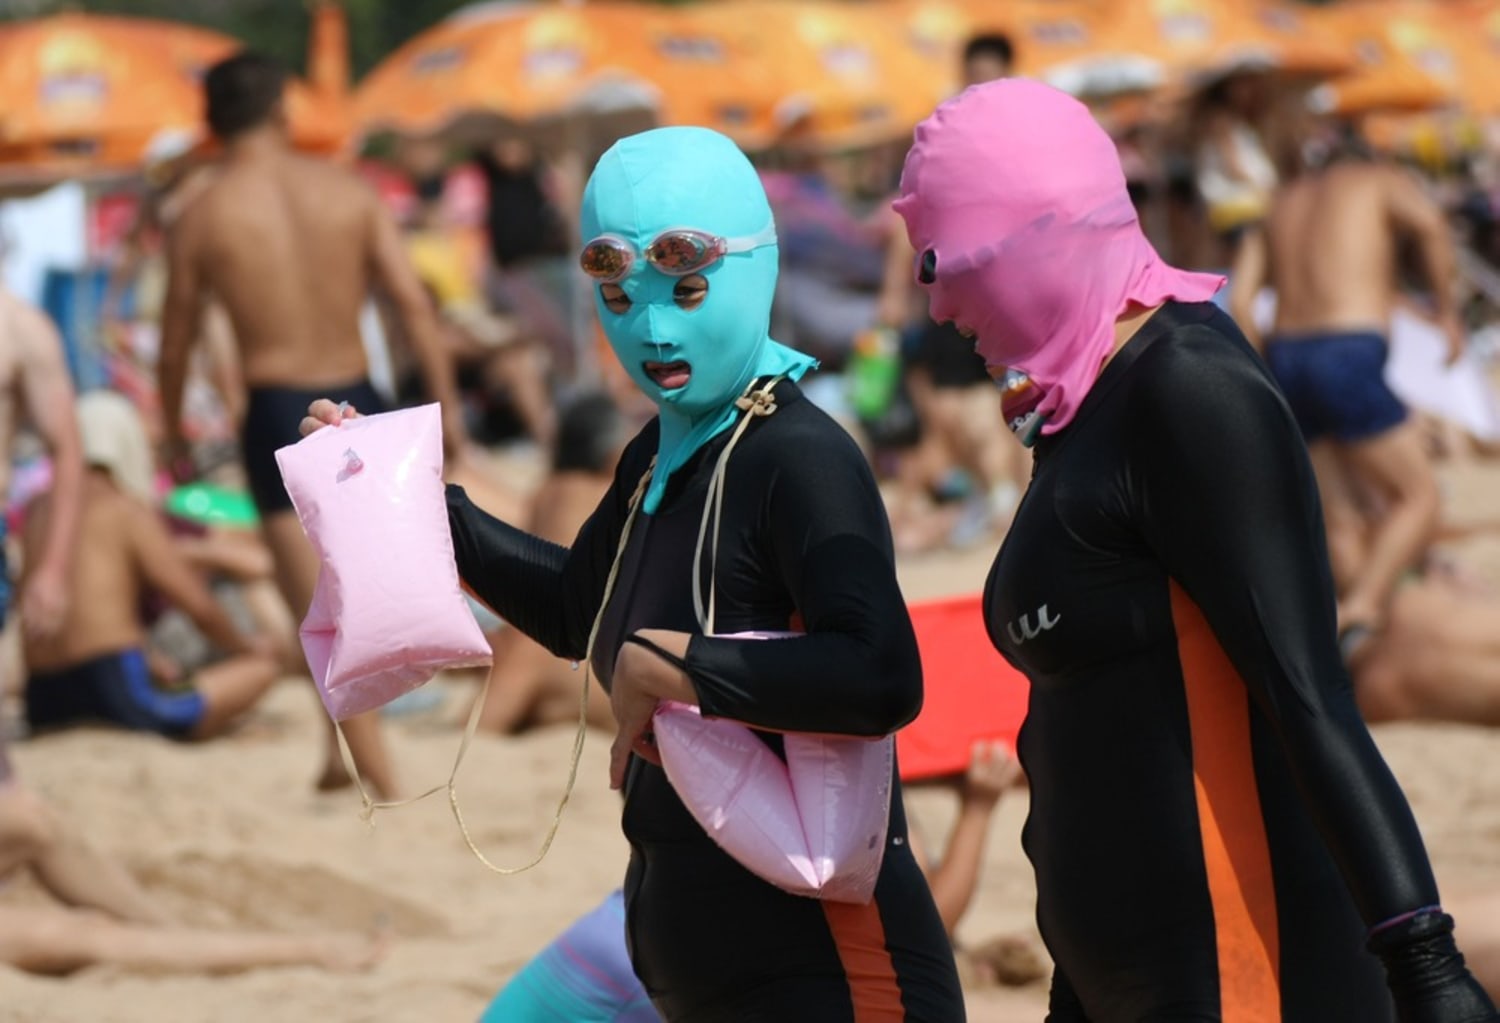 George Bernard med hensyn til Opbevares i køleskab Facekini craze hits China beach as swimmers try to avoid a tan